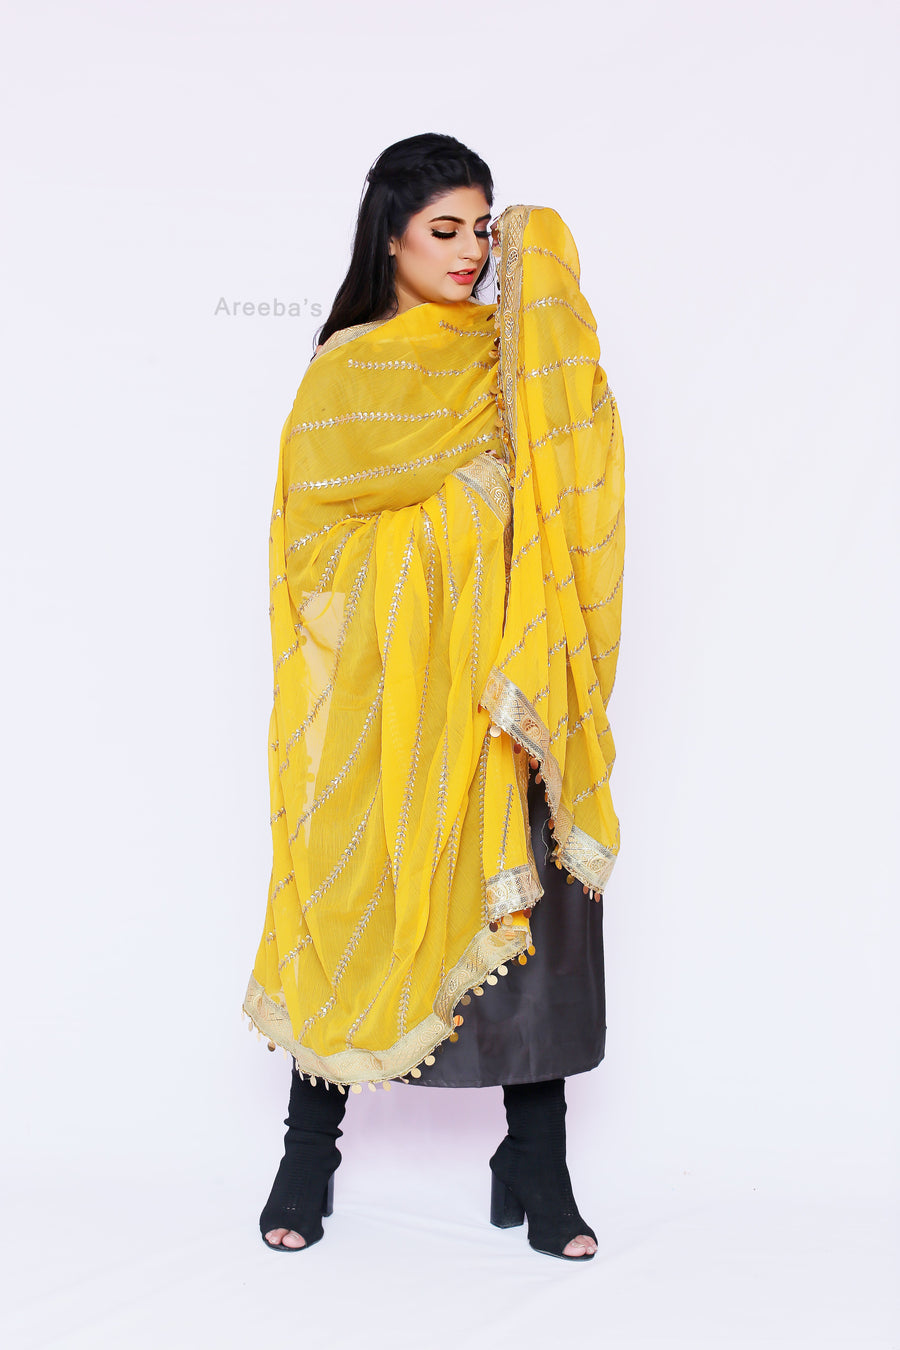 Mikado Yellow Chiffon- Areeba's Couture